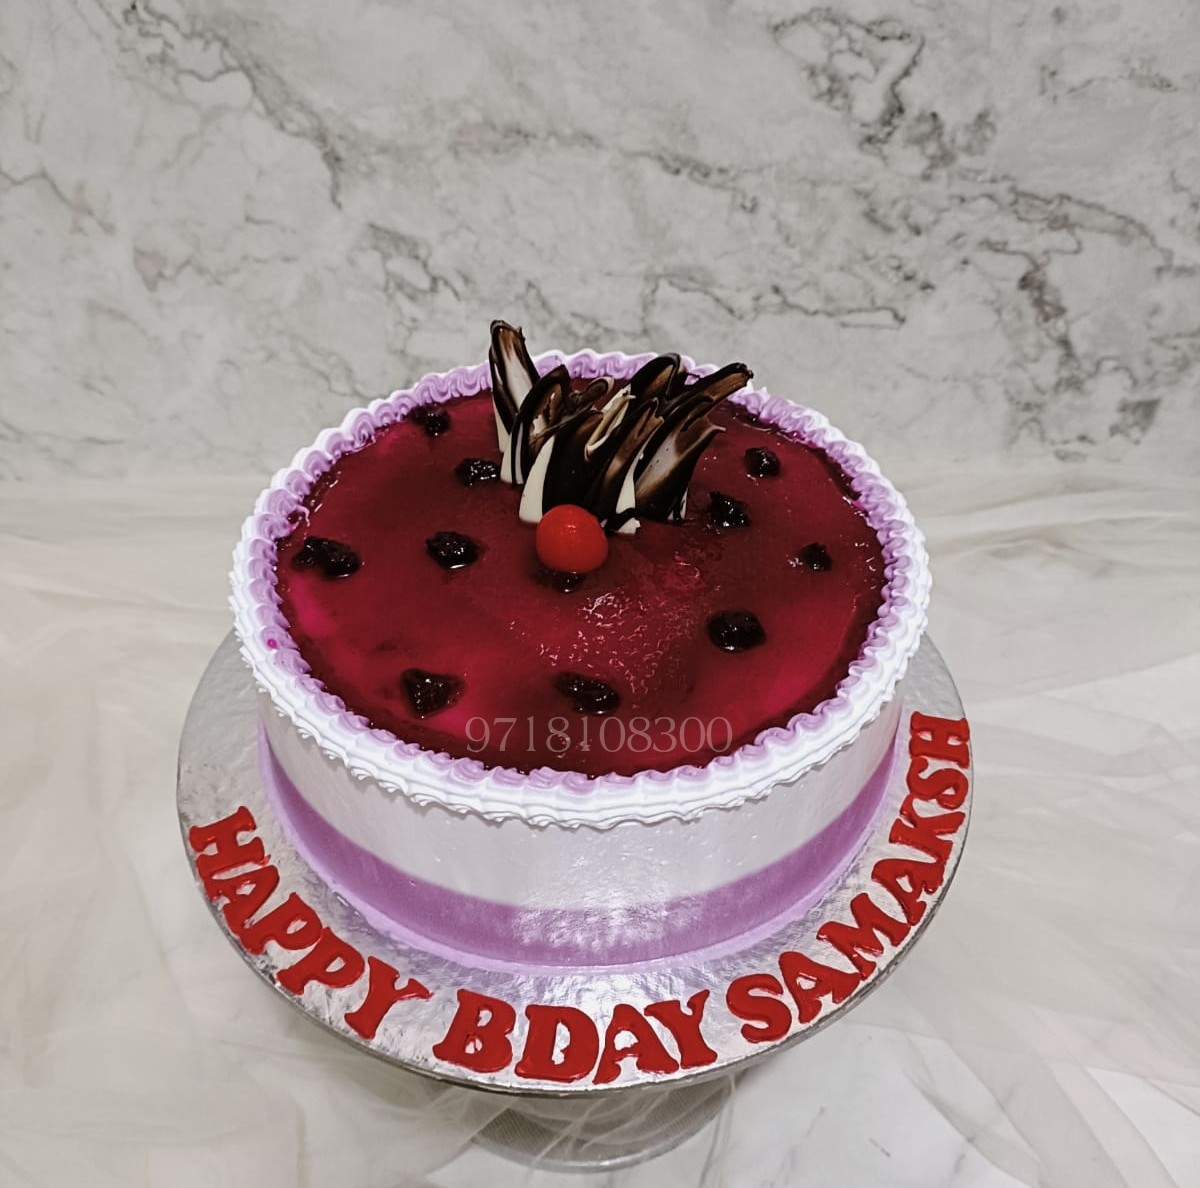 Buy blueberry delight cake online in chennai |Skholla.in